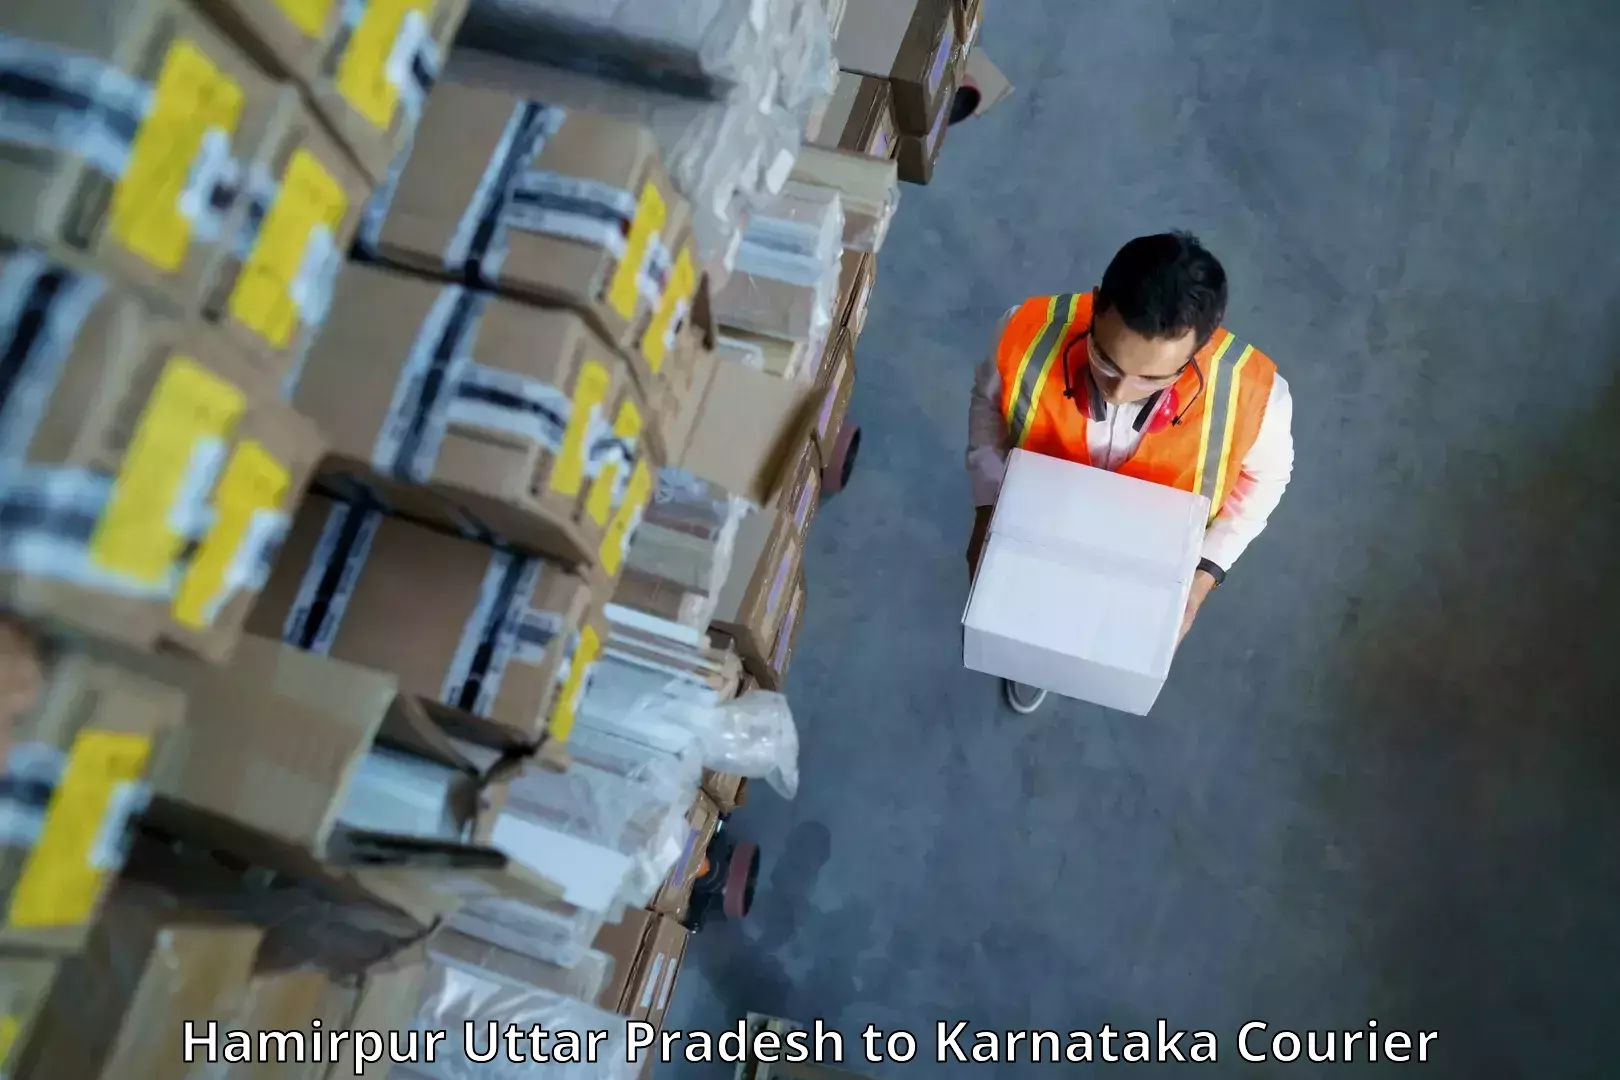 Efficient shipping operations Hamirpur Uttar Pradesh to Karnataka